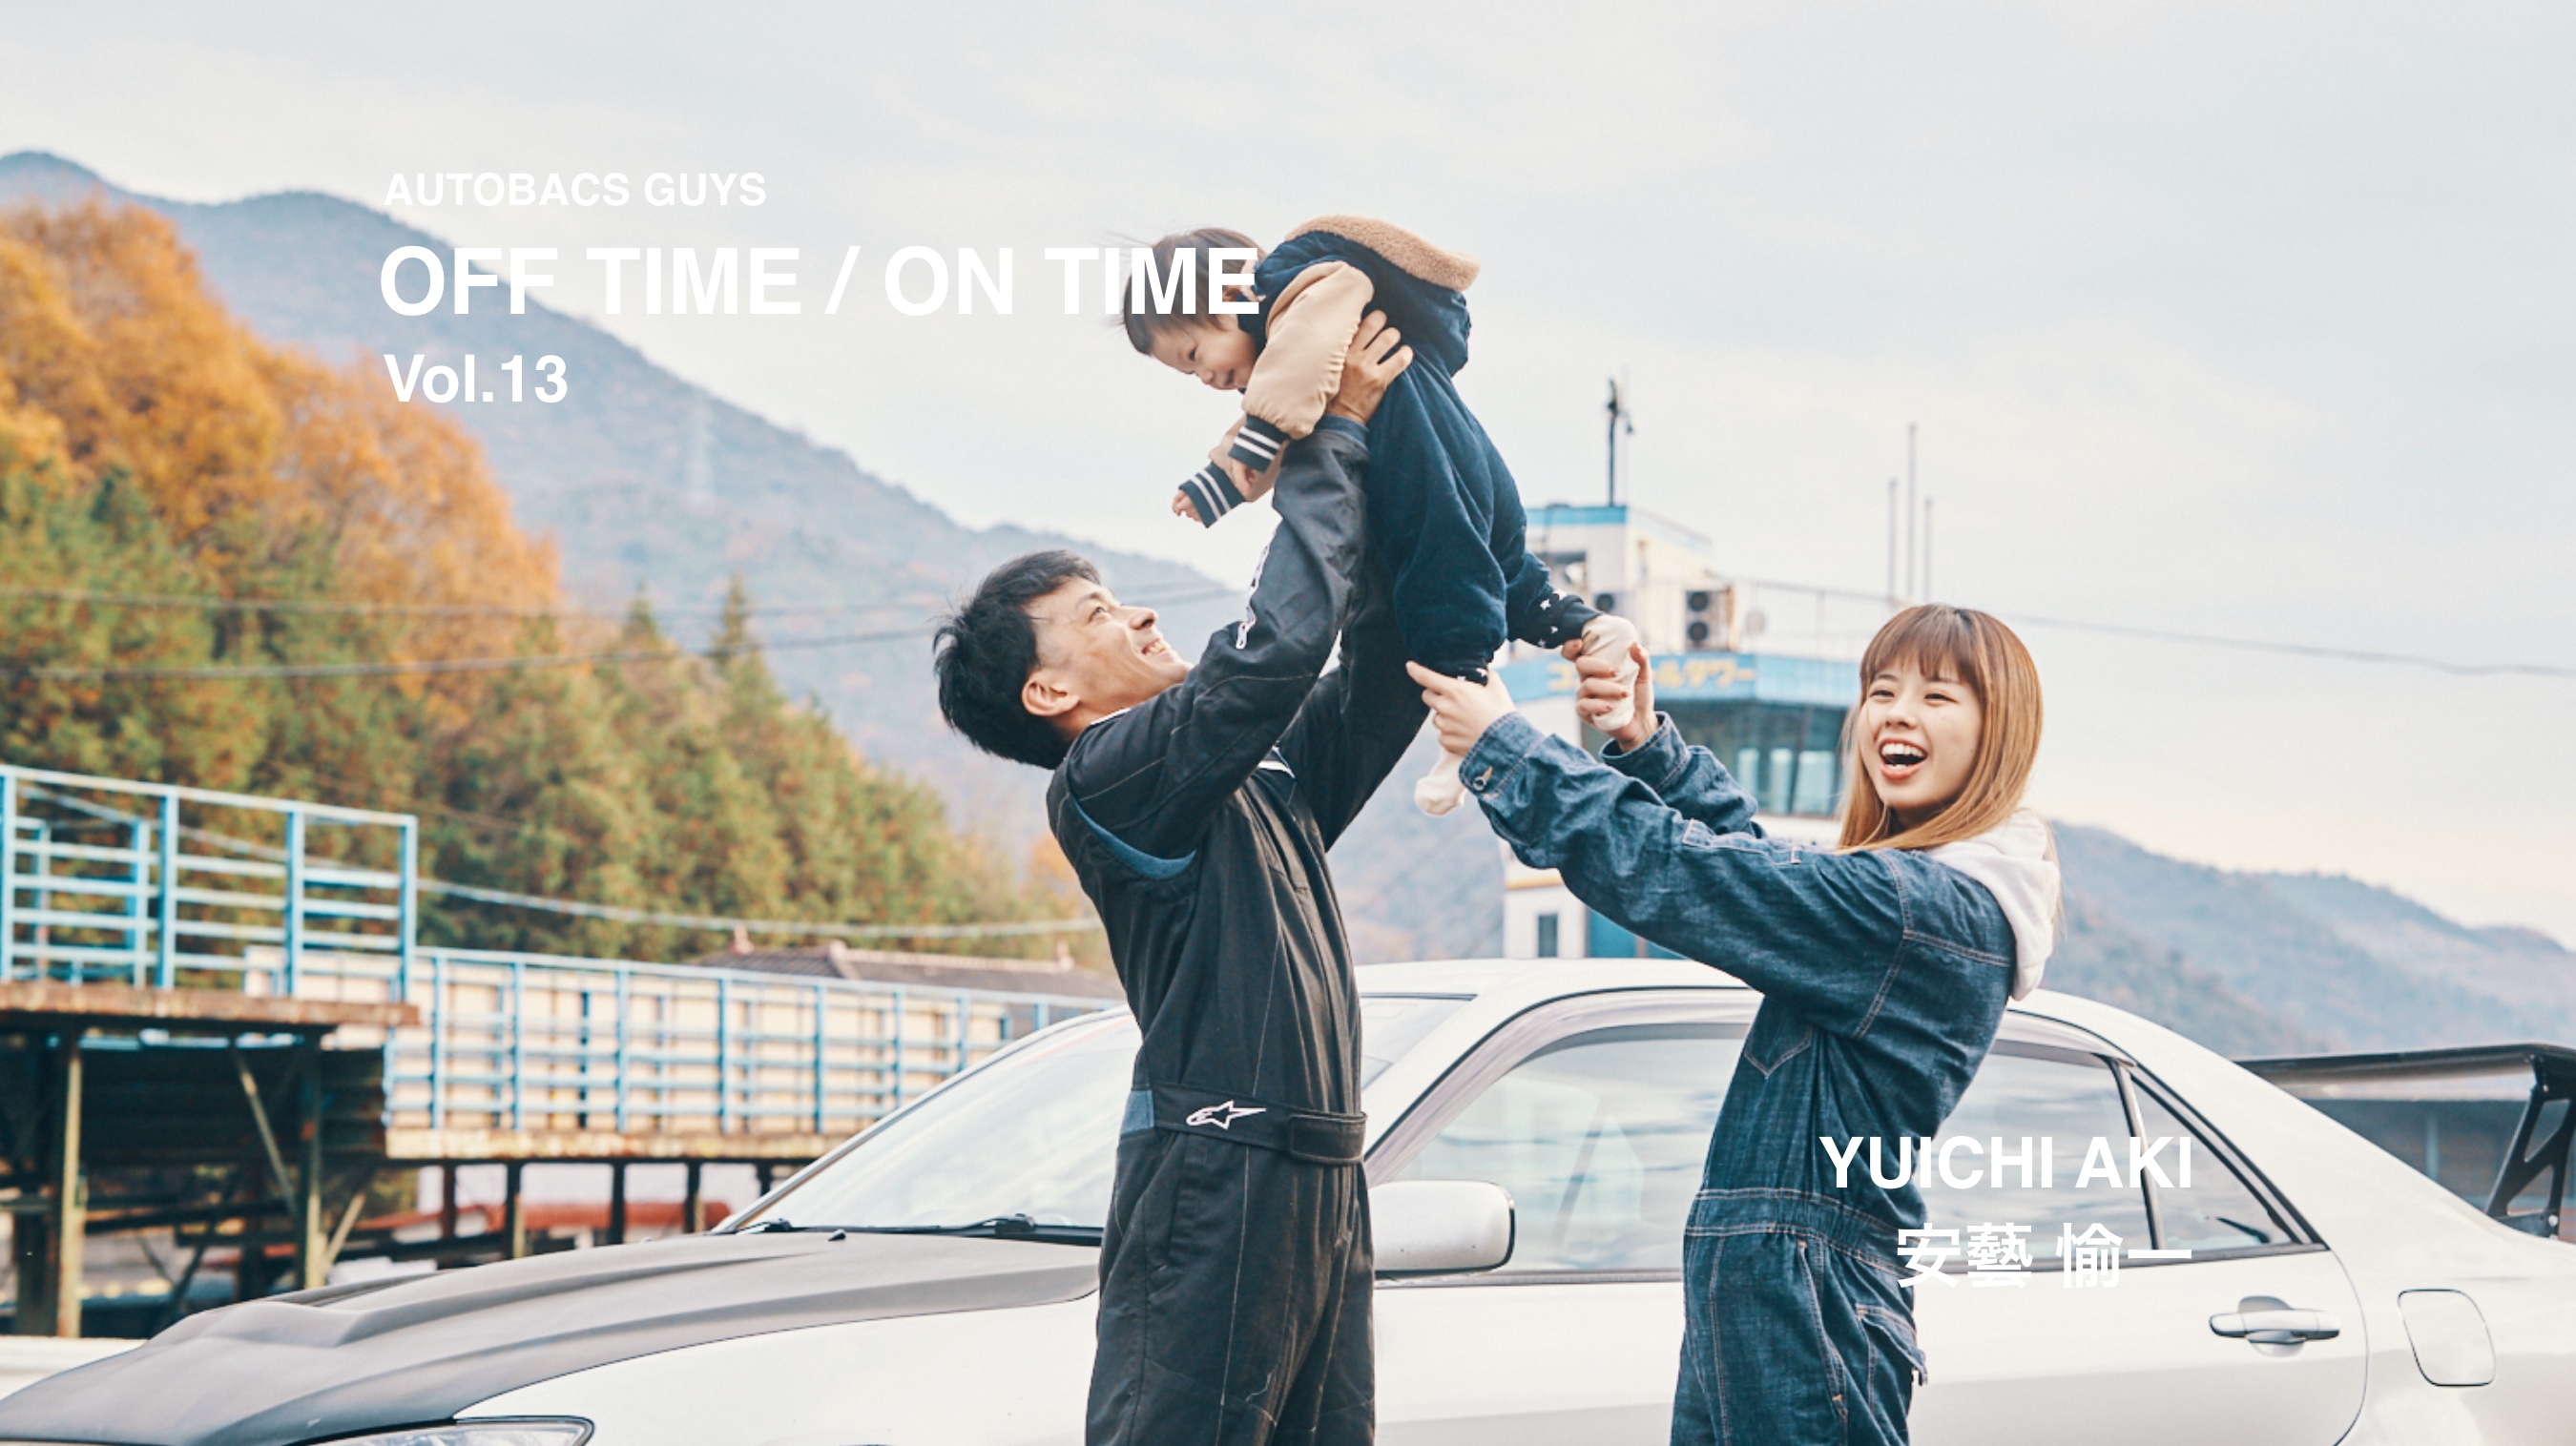 AUTOBACS GUYS OFF TIME / ON TIME オートバックスガイズの裏側　Vol.13 : 安藝 愉一 YUICHI AKI